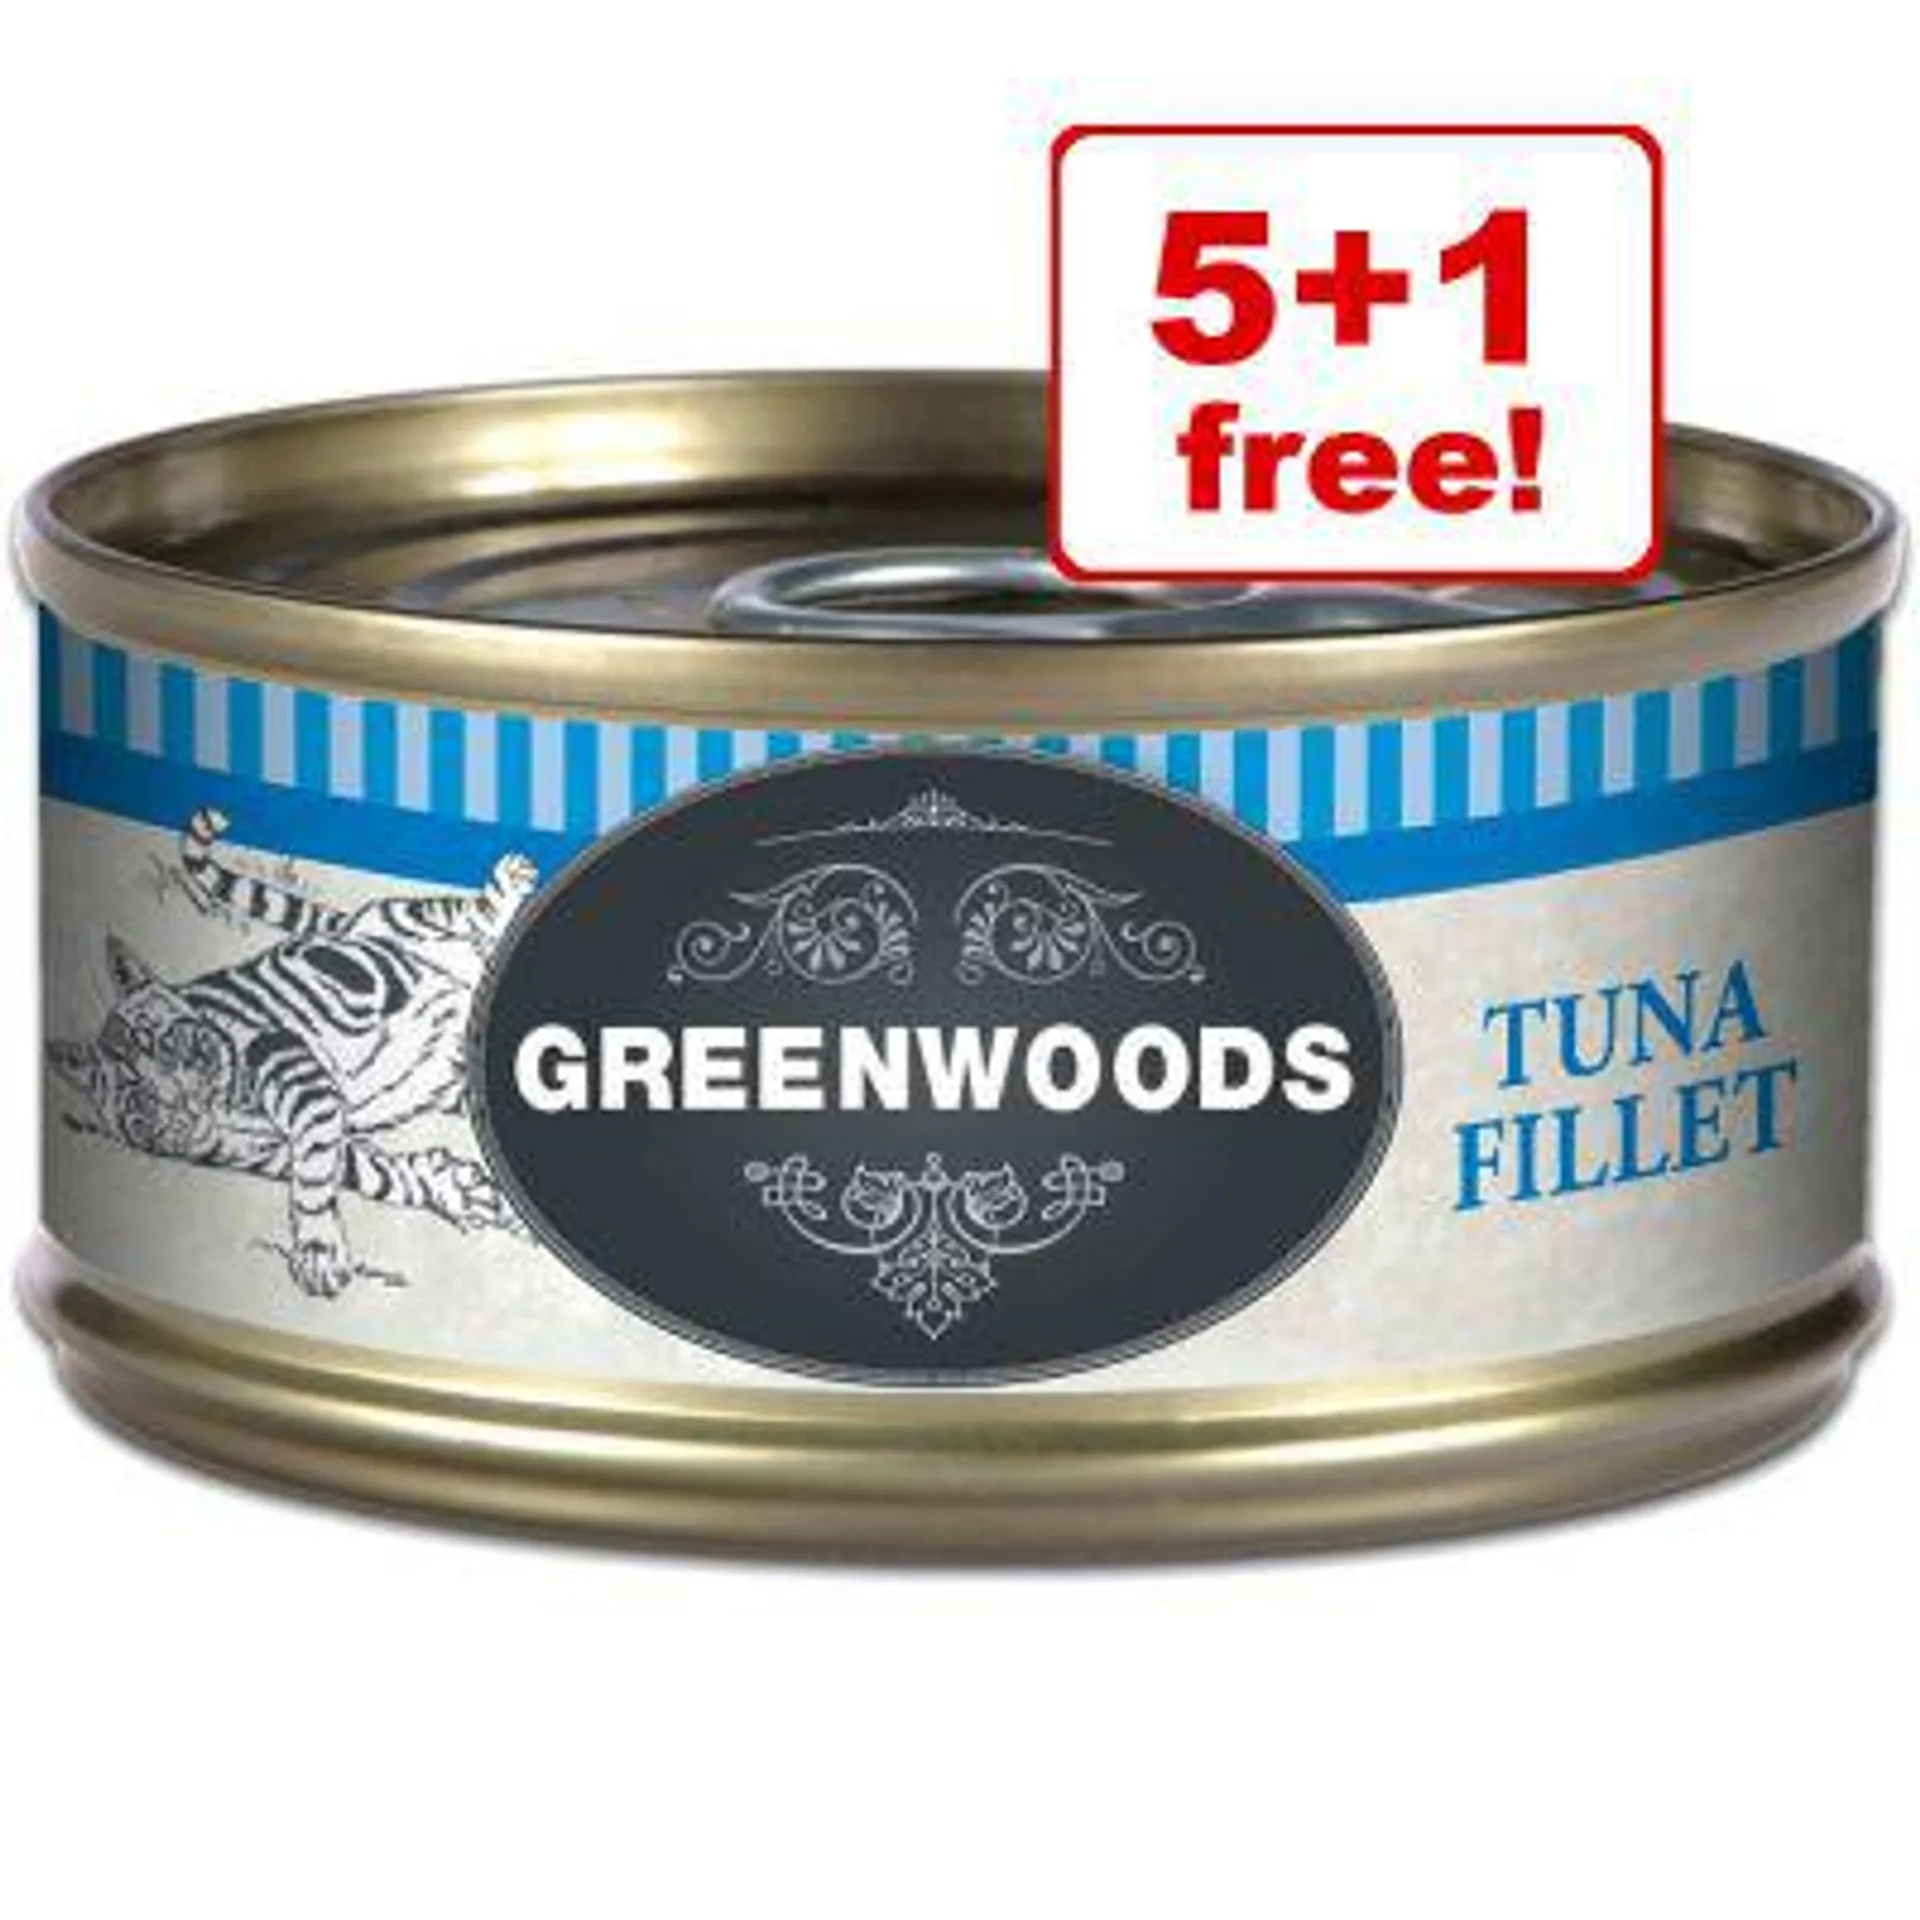 6 x 70g Greenwoods Adult Wet Cat Food - 5 + 1 Free!*